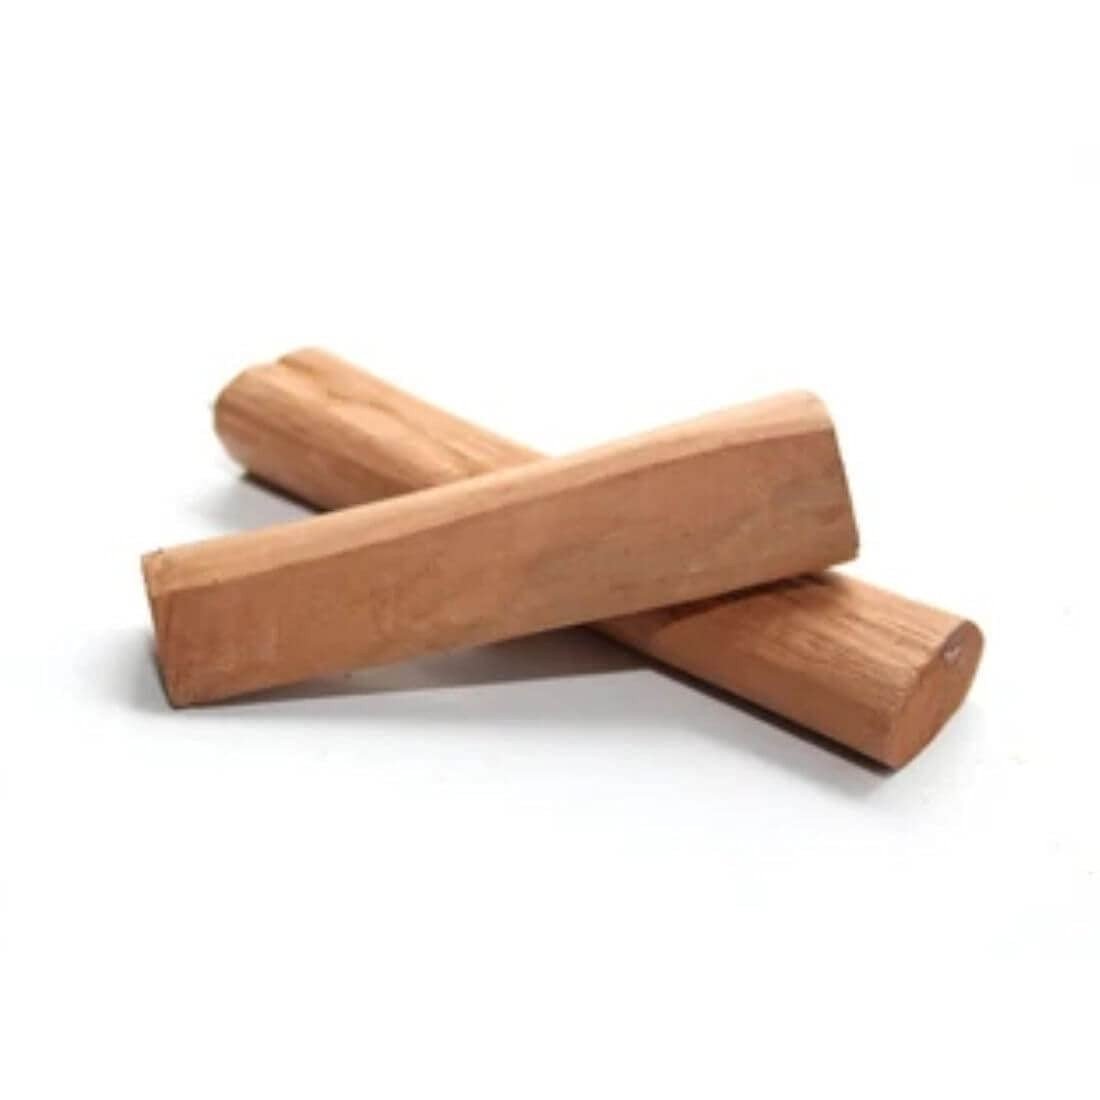 MAYAPURI Original Sandalwood Stick/Pure Chandan Stick for Puja, Face